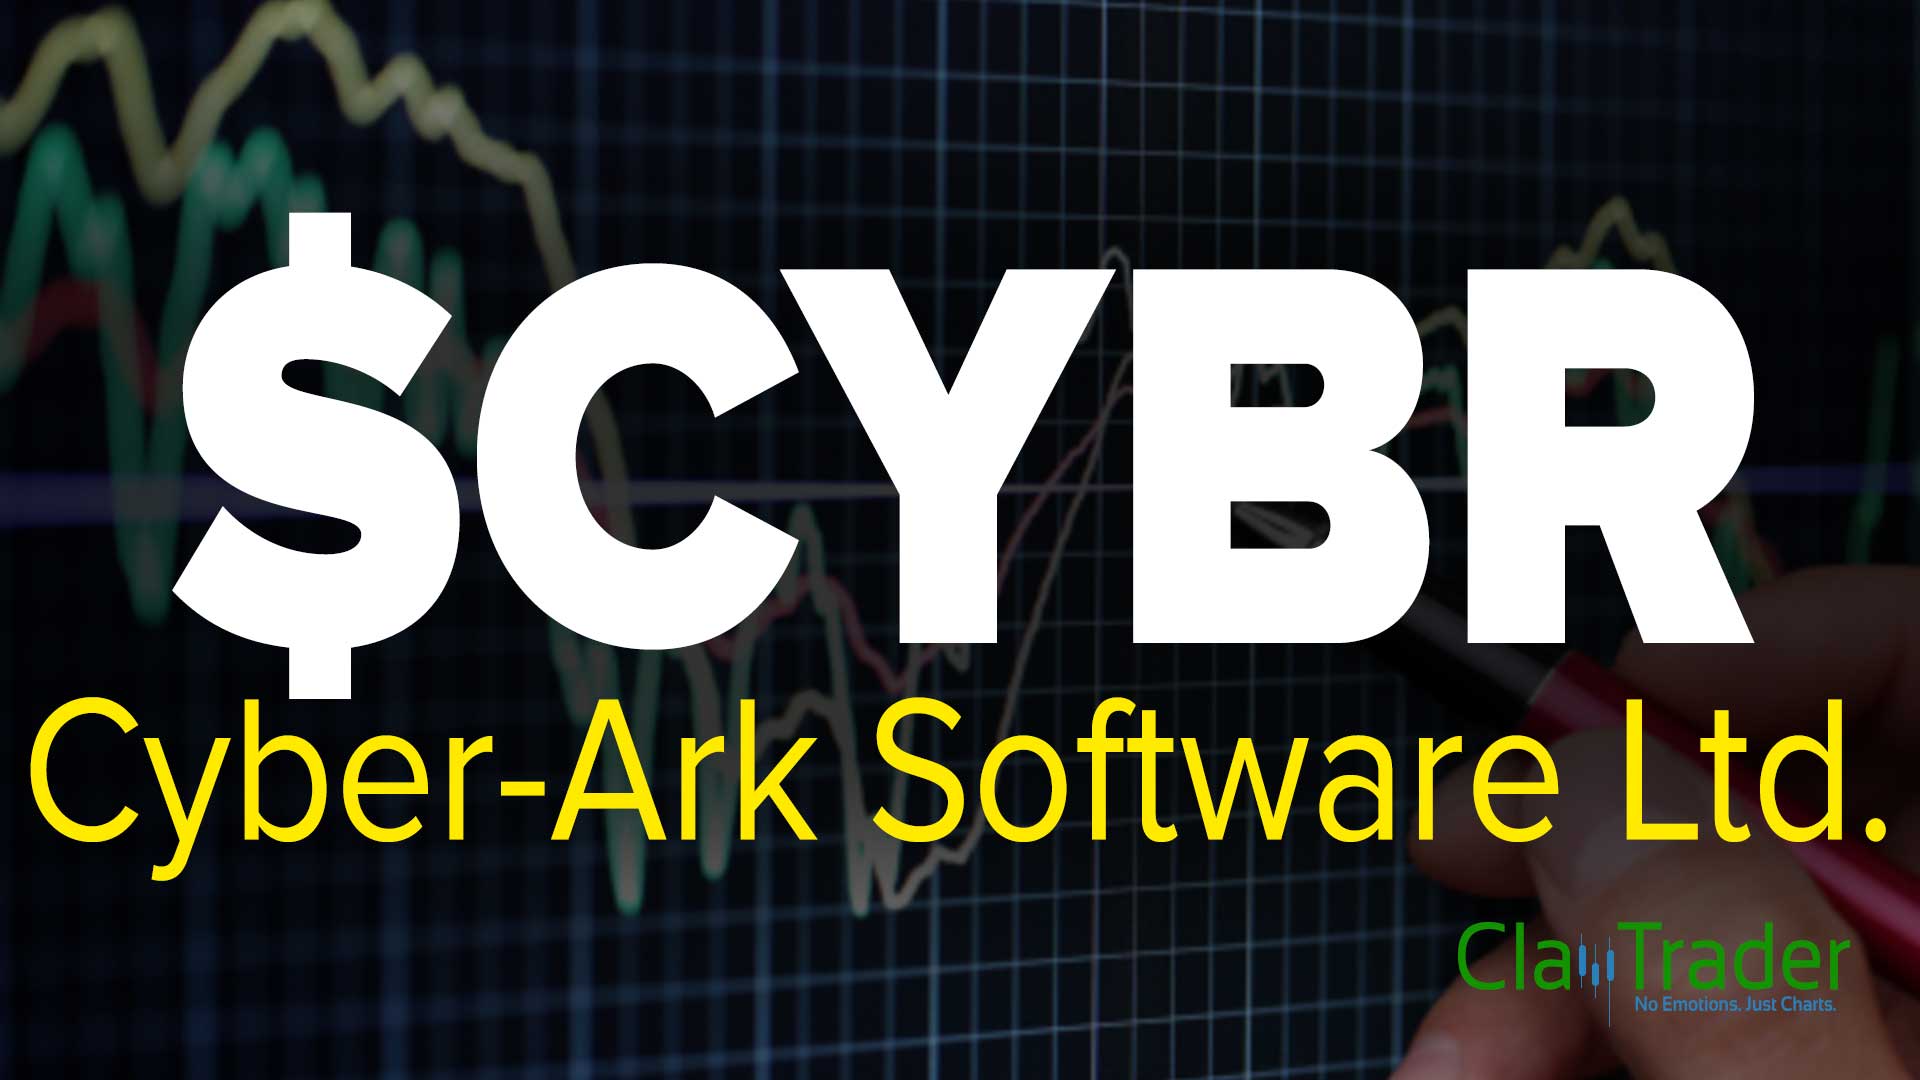 Cyber-Ark Software Ltd. (CYBR) Stock Chart Technical Analysis